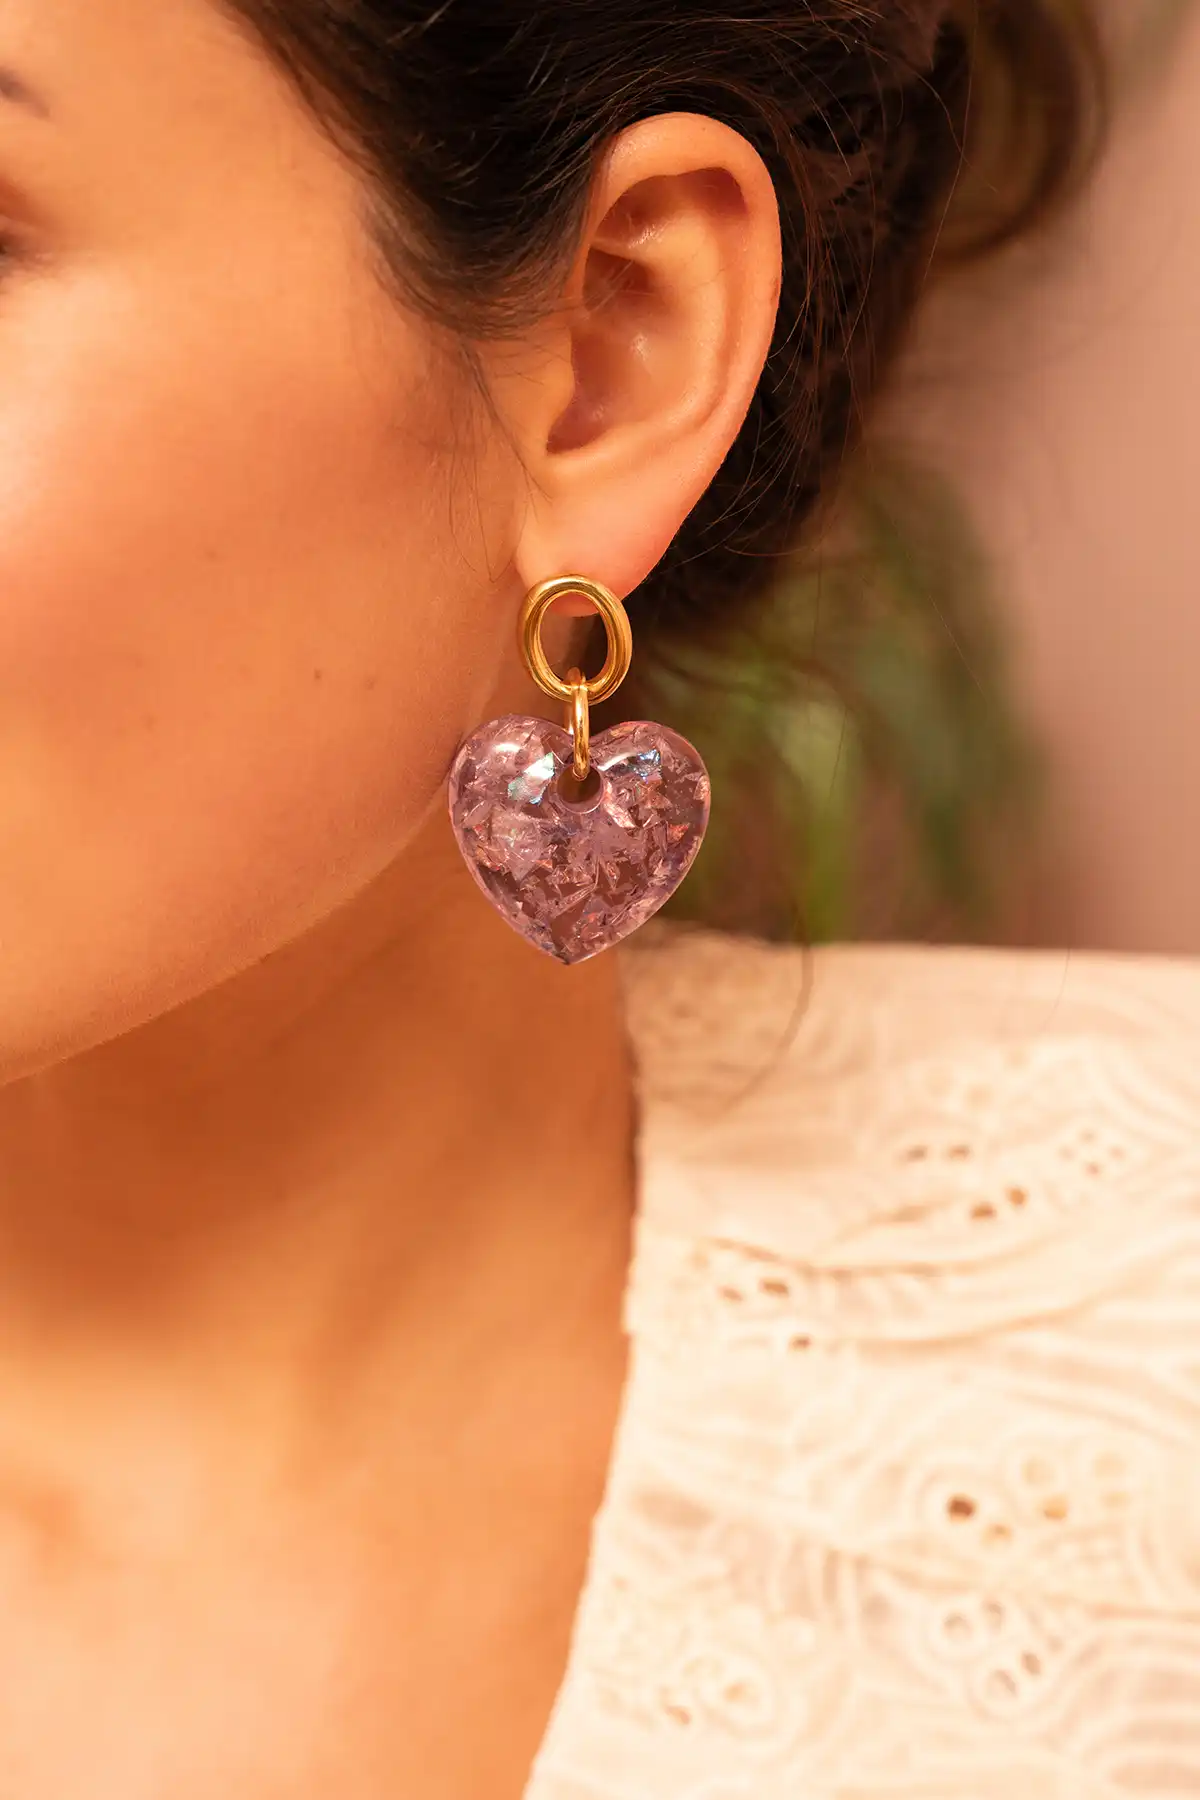 Purple Earrings Idaly Heart Llott-theme.productDescriptionPage.SEO.byTheBrand